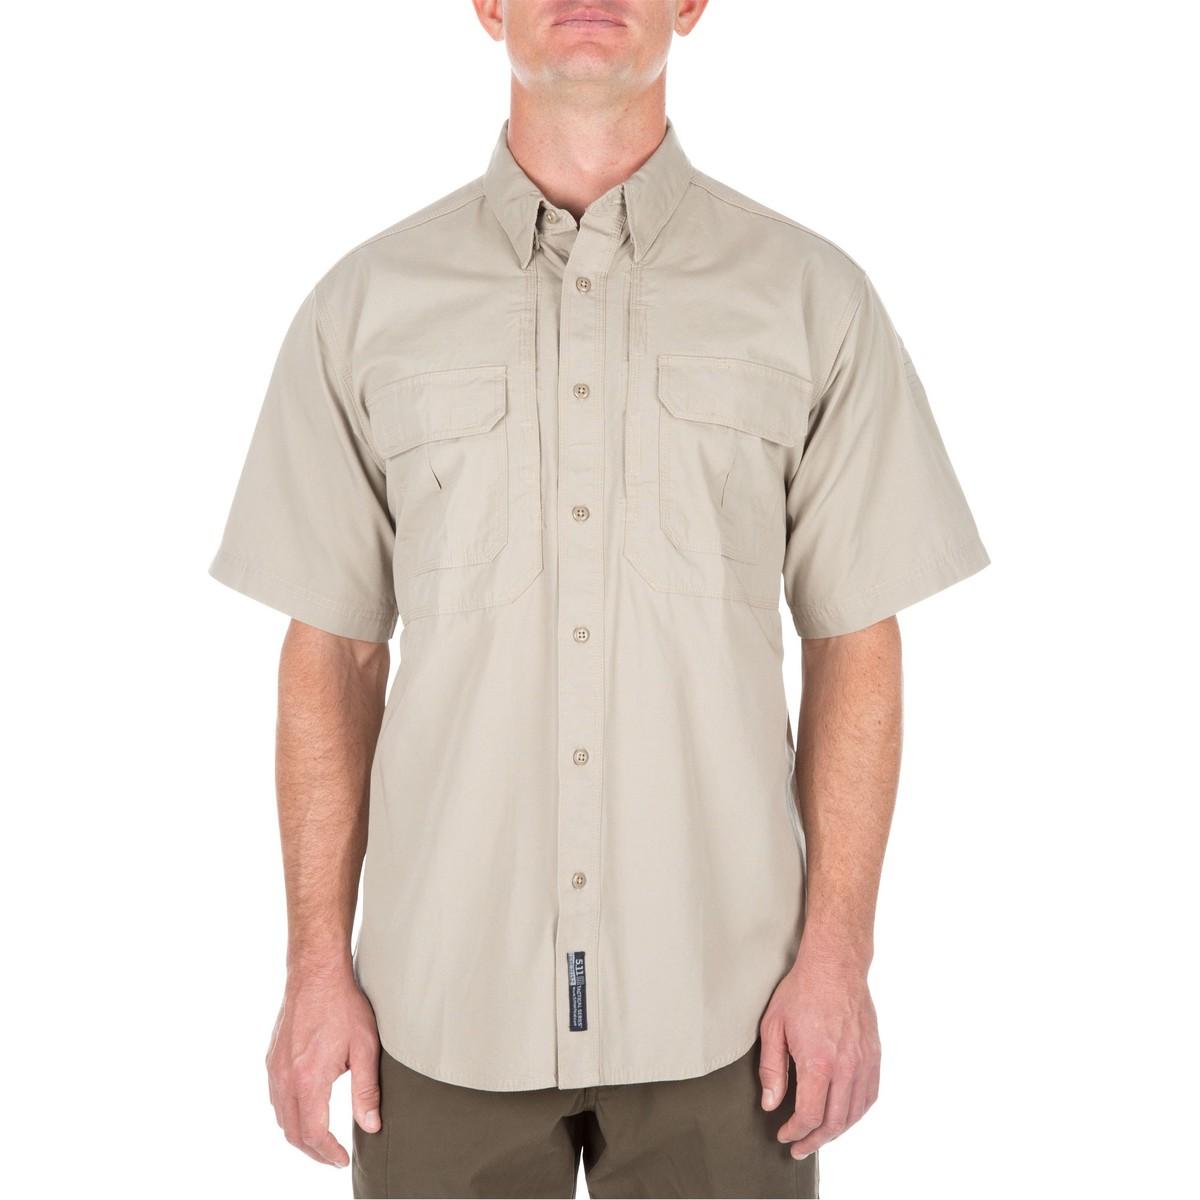 Tactical Uniform for Military, Law Enforcement | Buy 5.11 TACTICAL ...